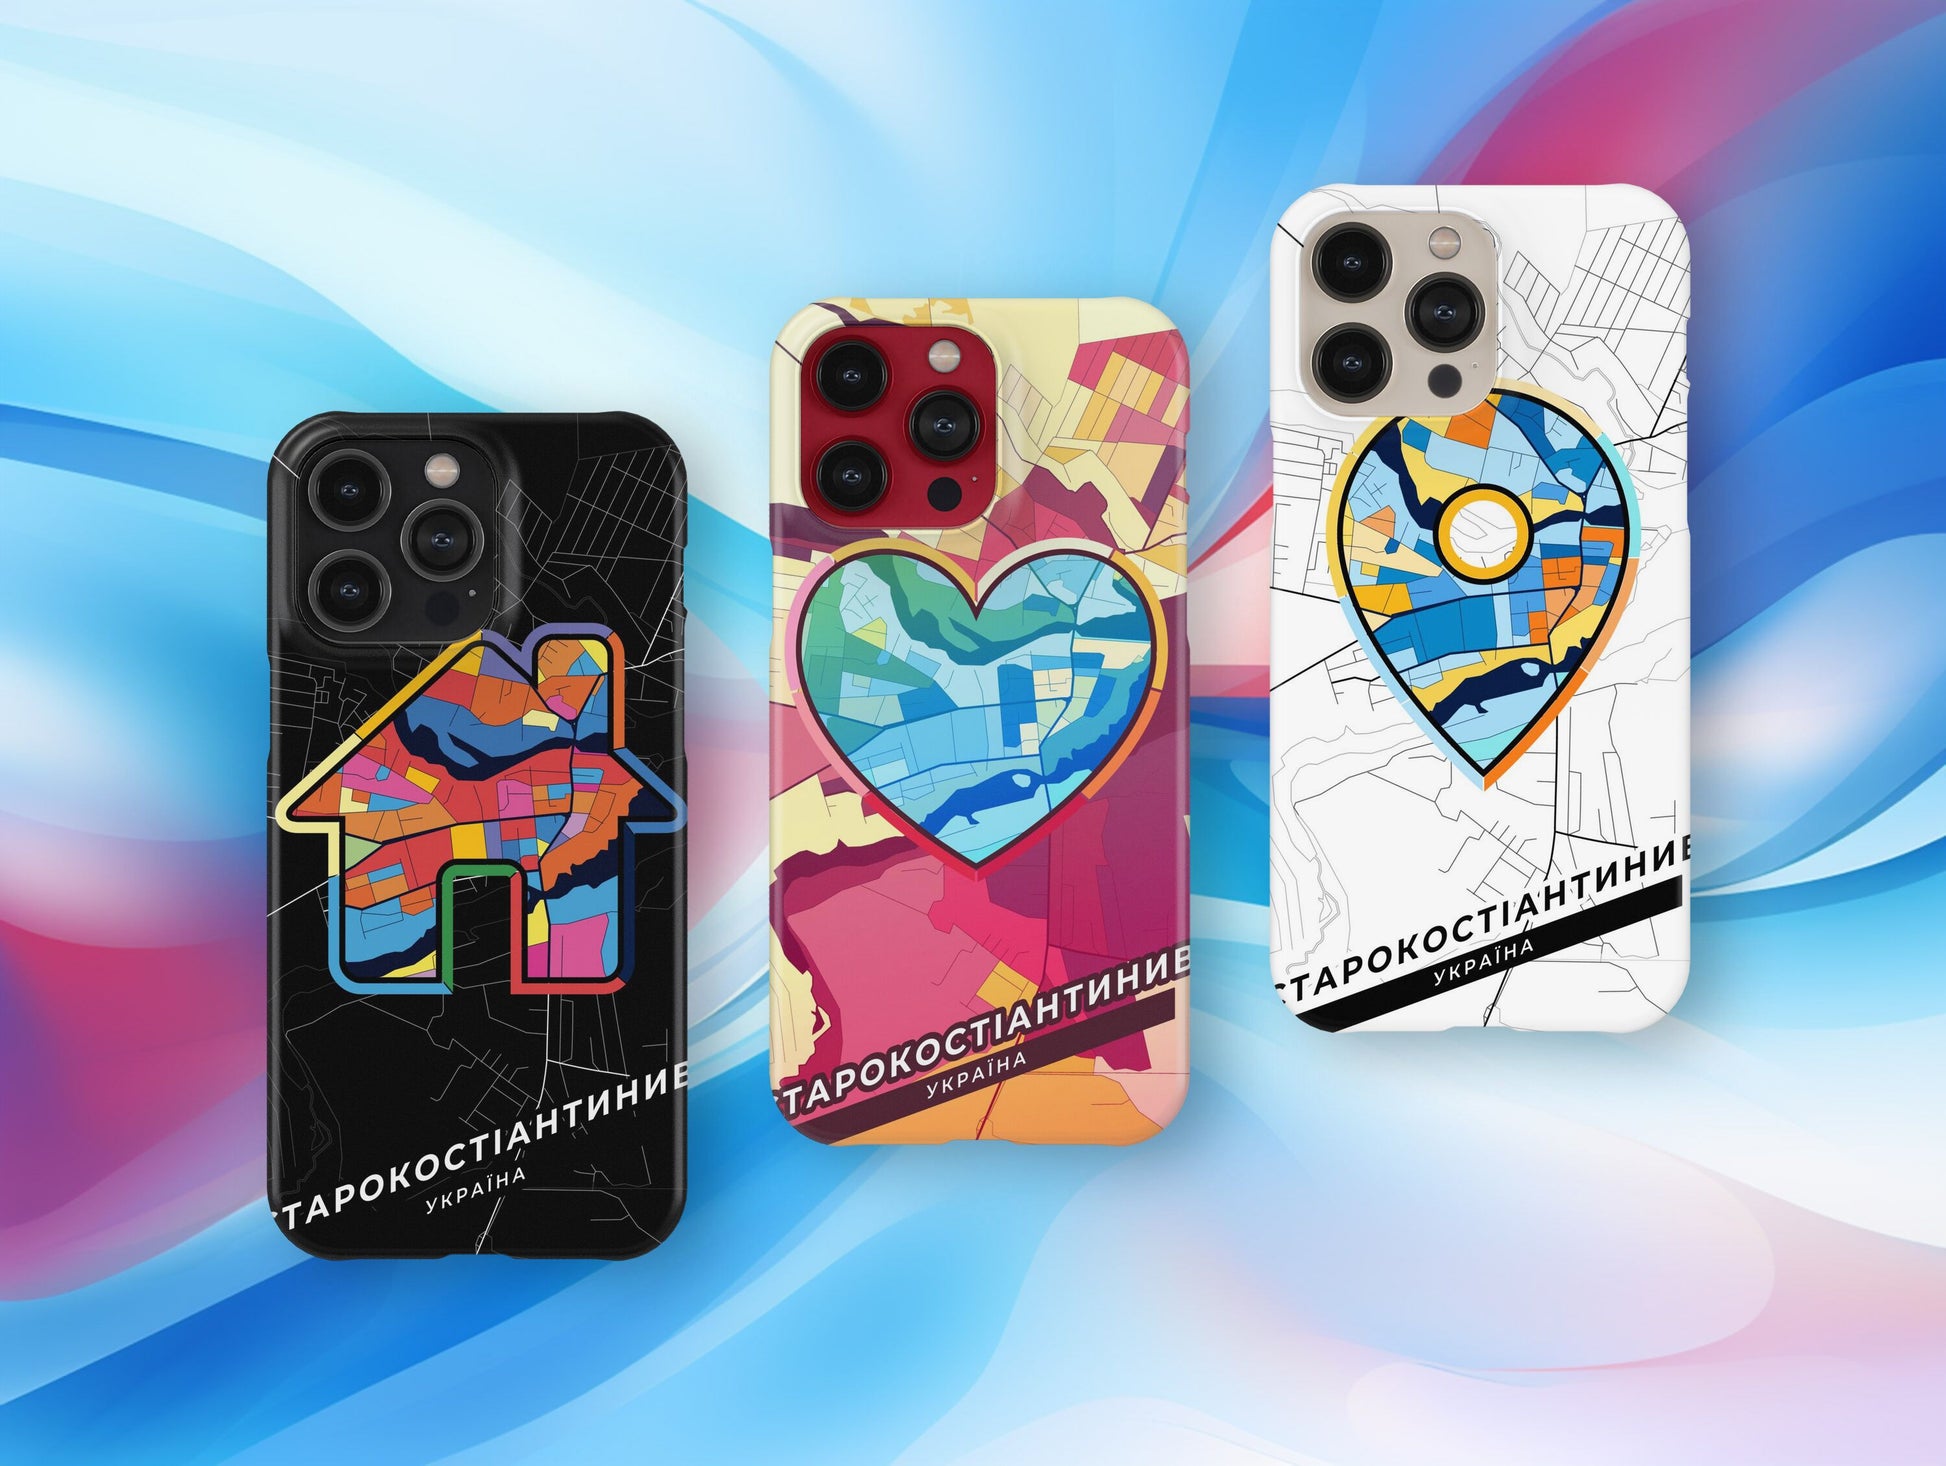 Starokostiantyniv Ukraine slim phone case with colorful icon